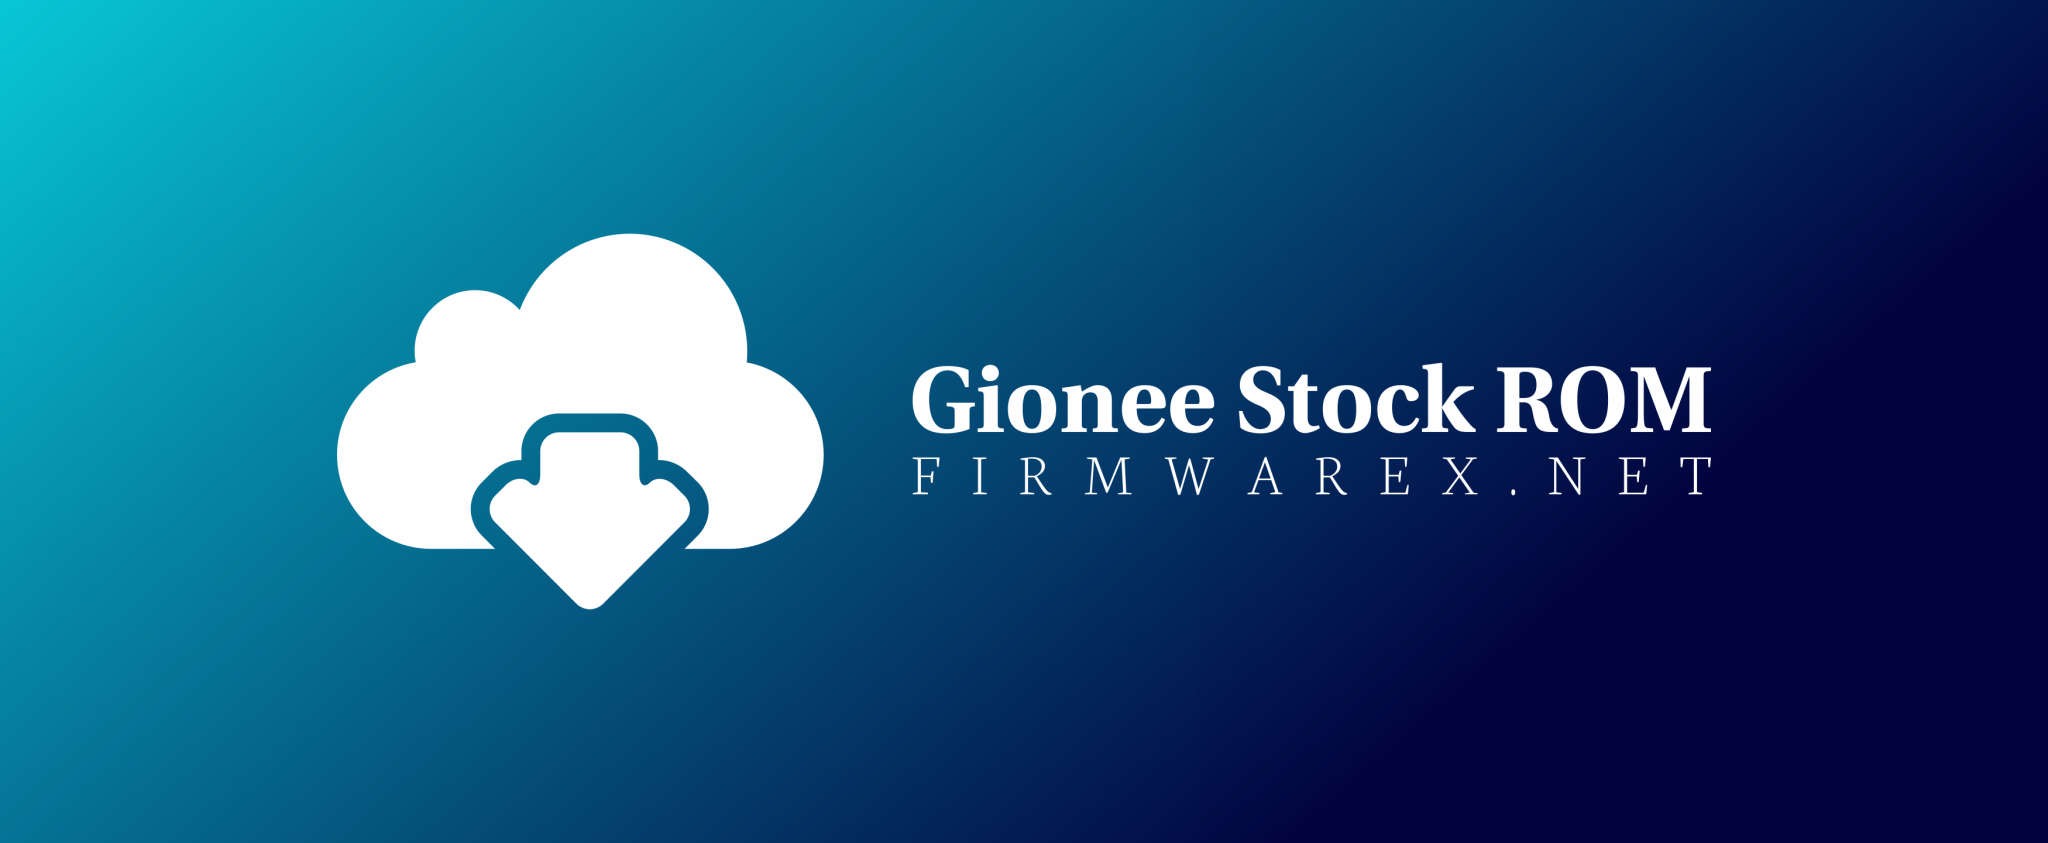 Gionee Stock ROM